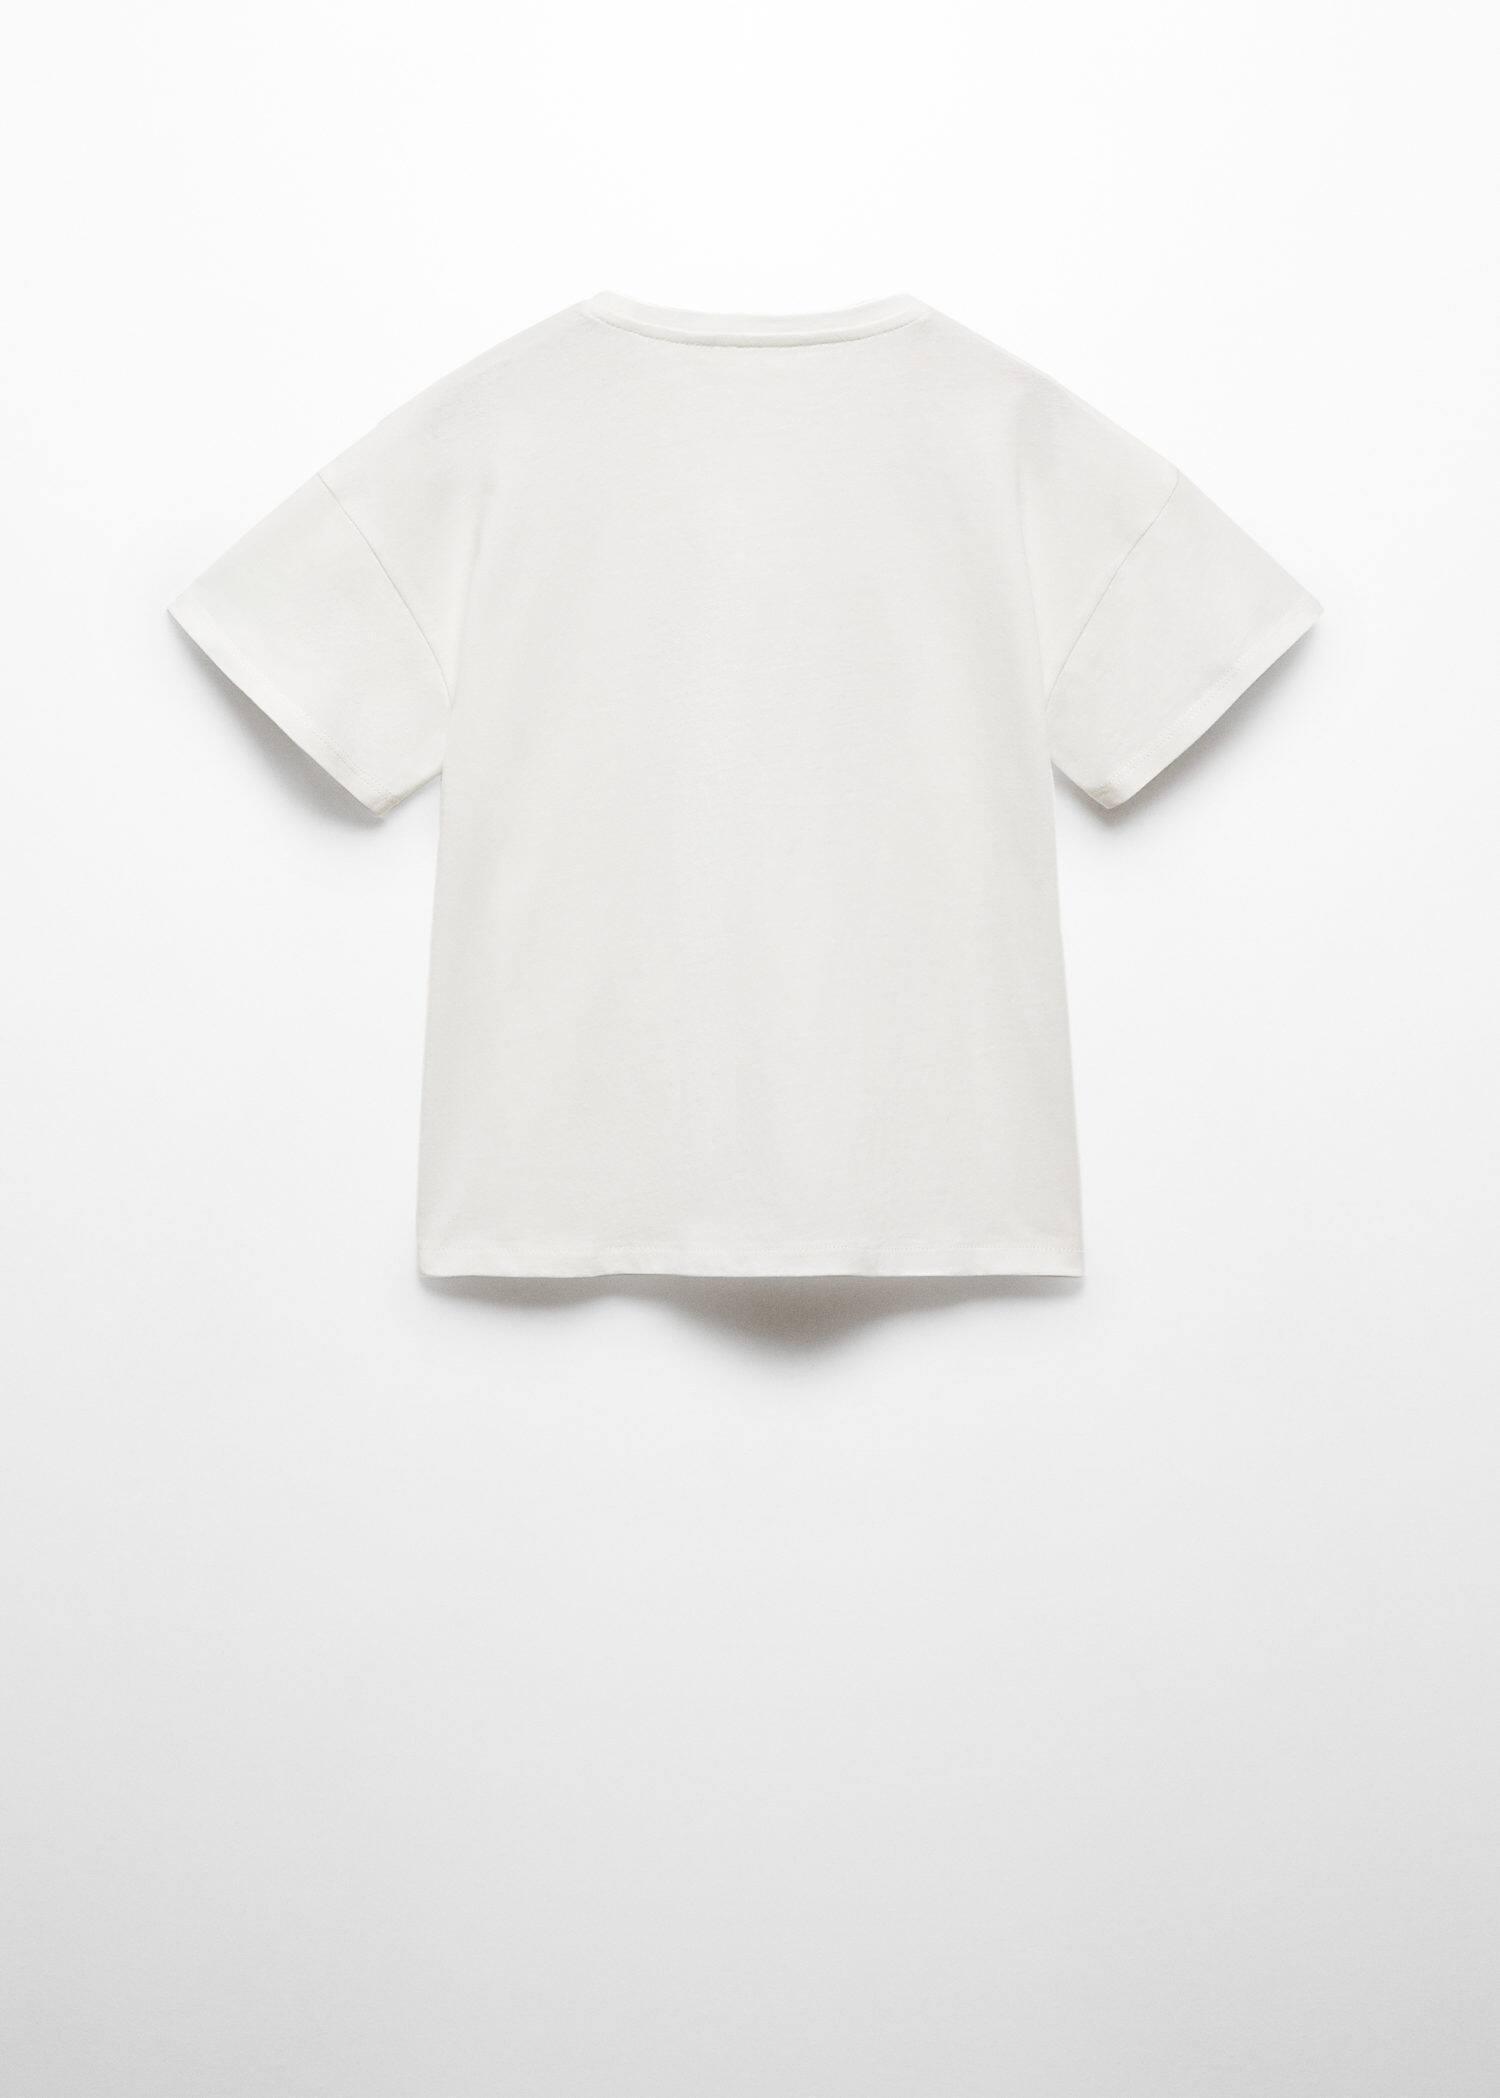 Mango - White Knot Printed T-Shirt, Kids Girls